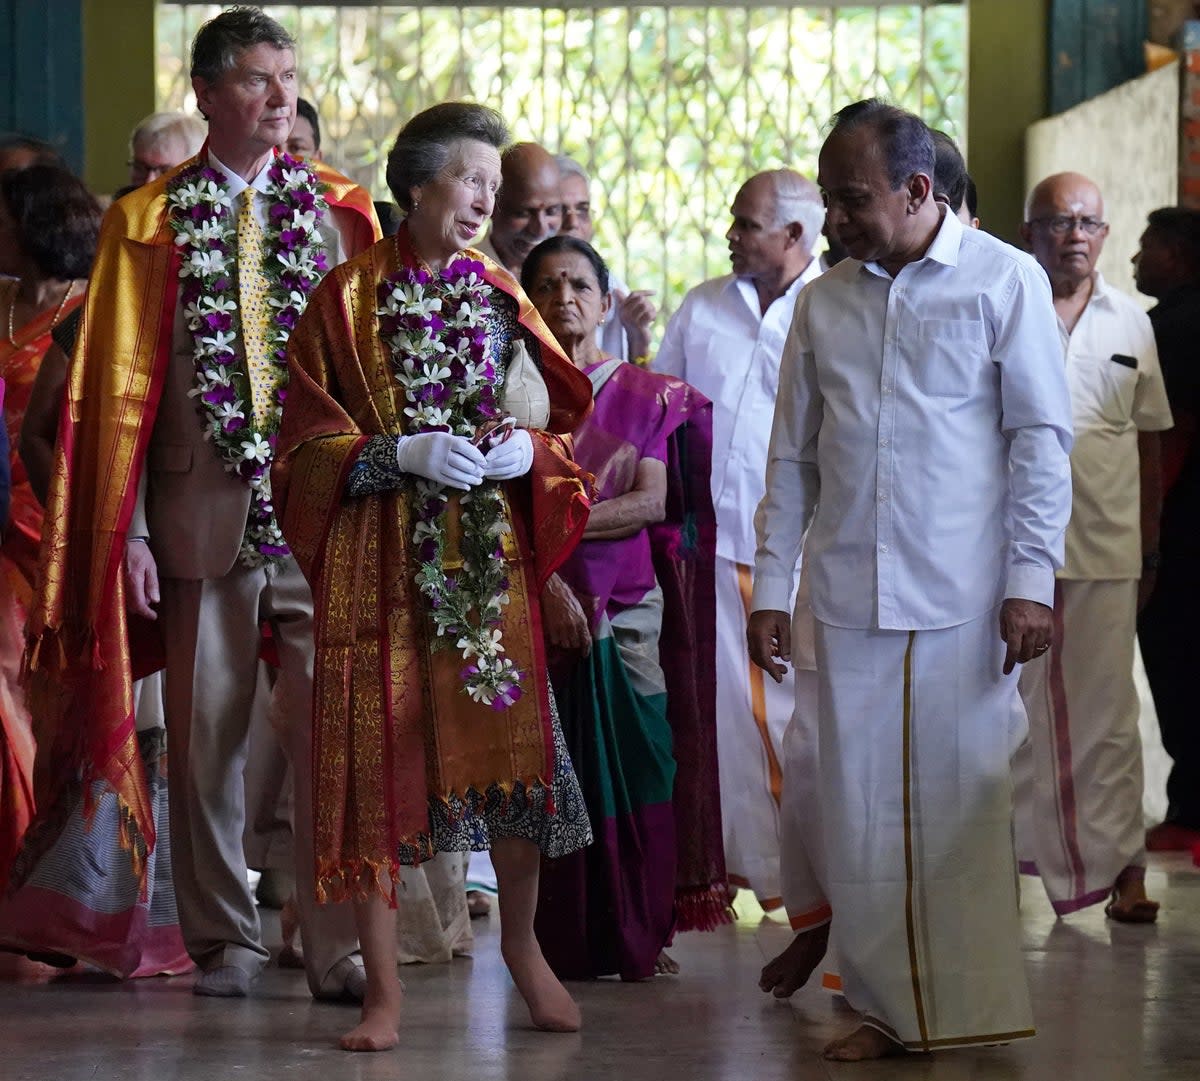 The Princess Royal and her husband Vice Admiral Sir Timothy Laurence during a visit to Vajira Pillayar Kovil Hindu temple in Colombo, Sri Lanka (PA)